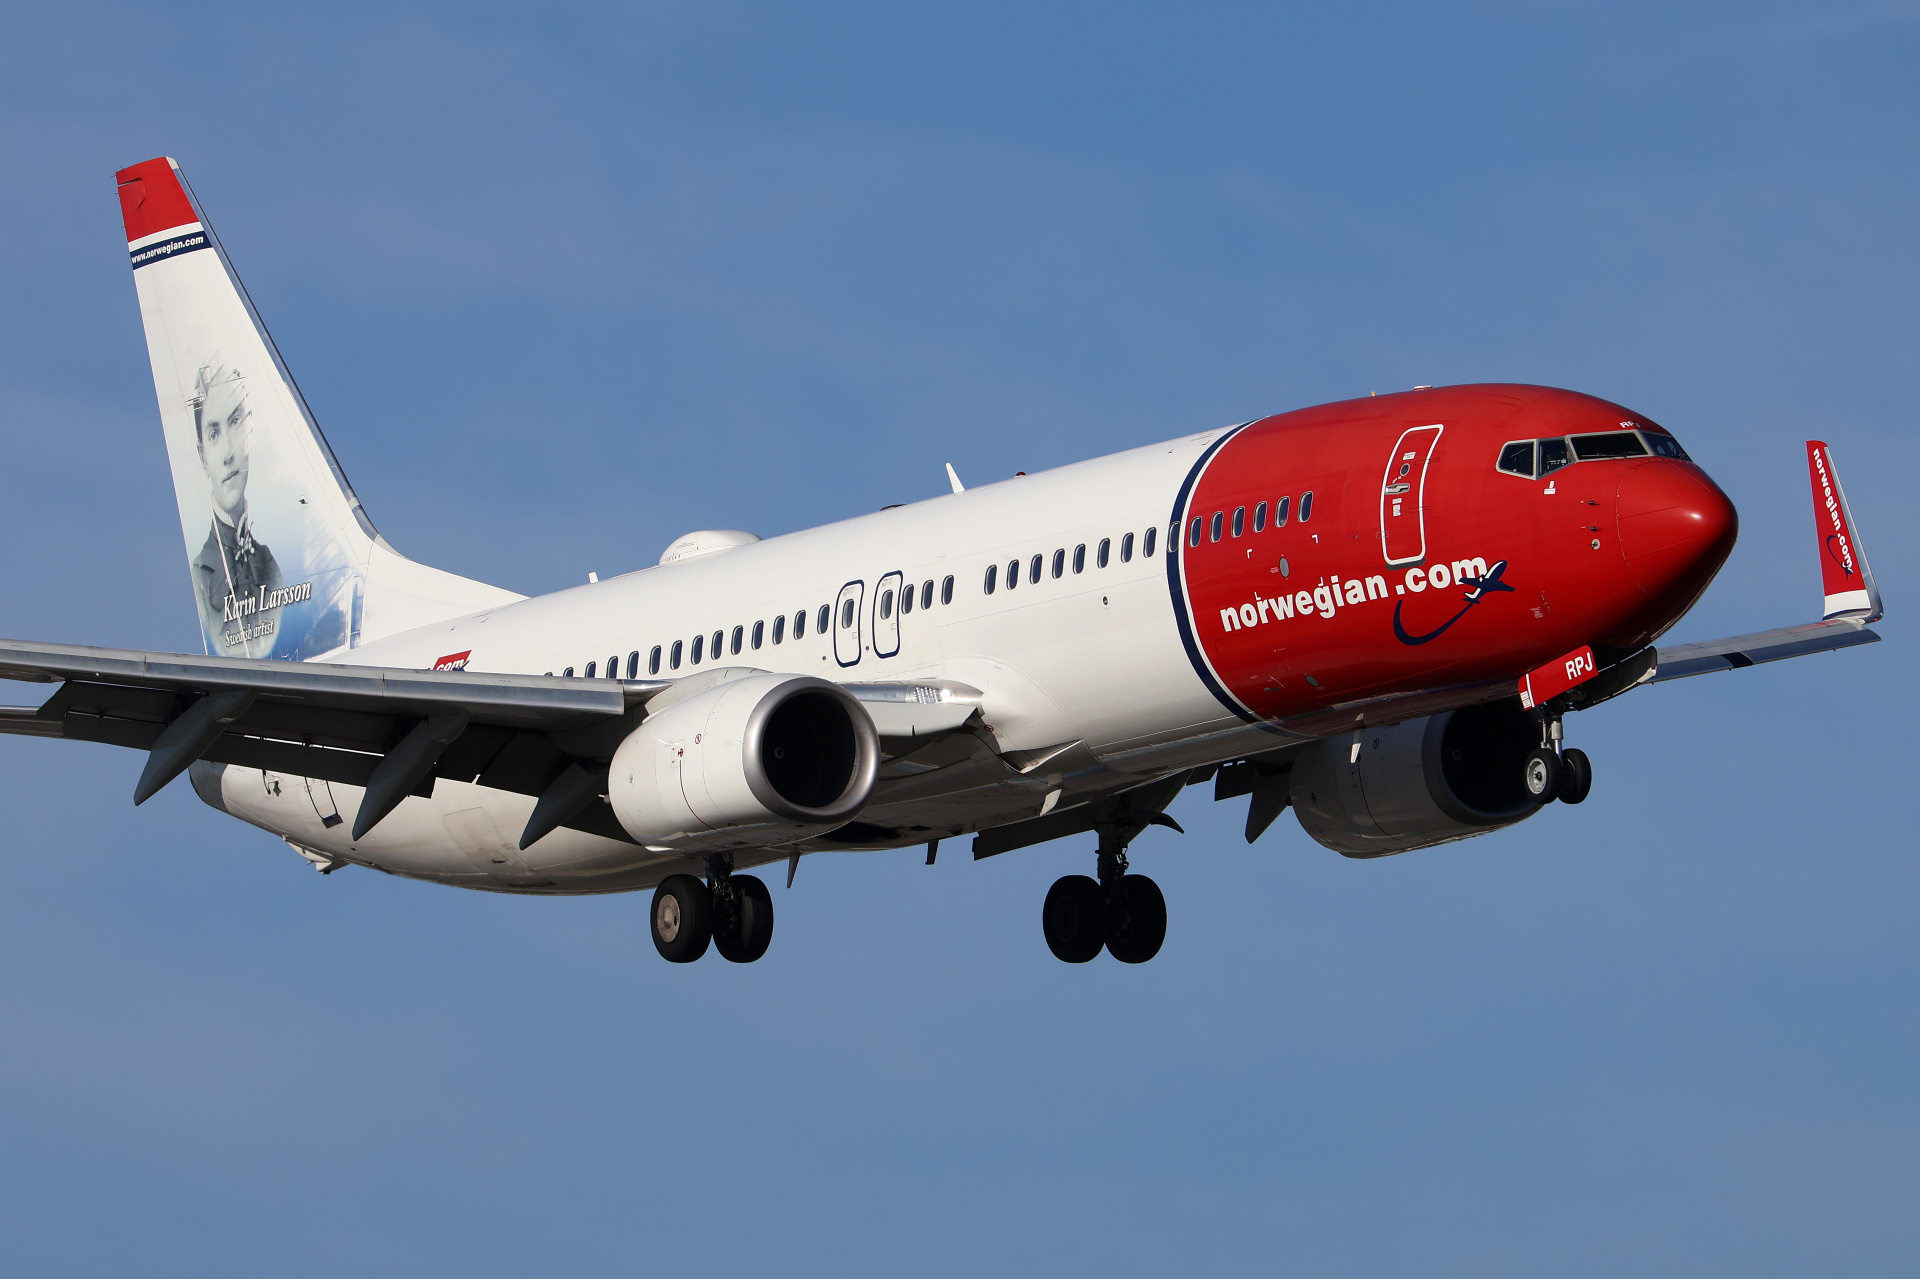 SE-RPJ, Norwegian Air Sweden (Aircraft » EPWA Spotting » Boeing 737-800 » Norwegian Air)